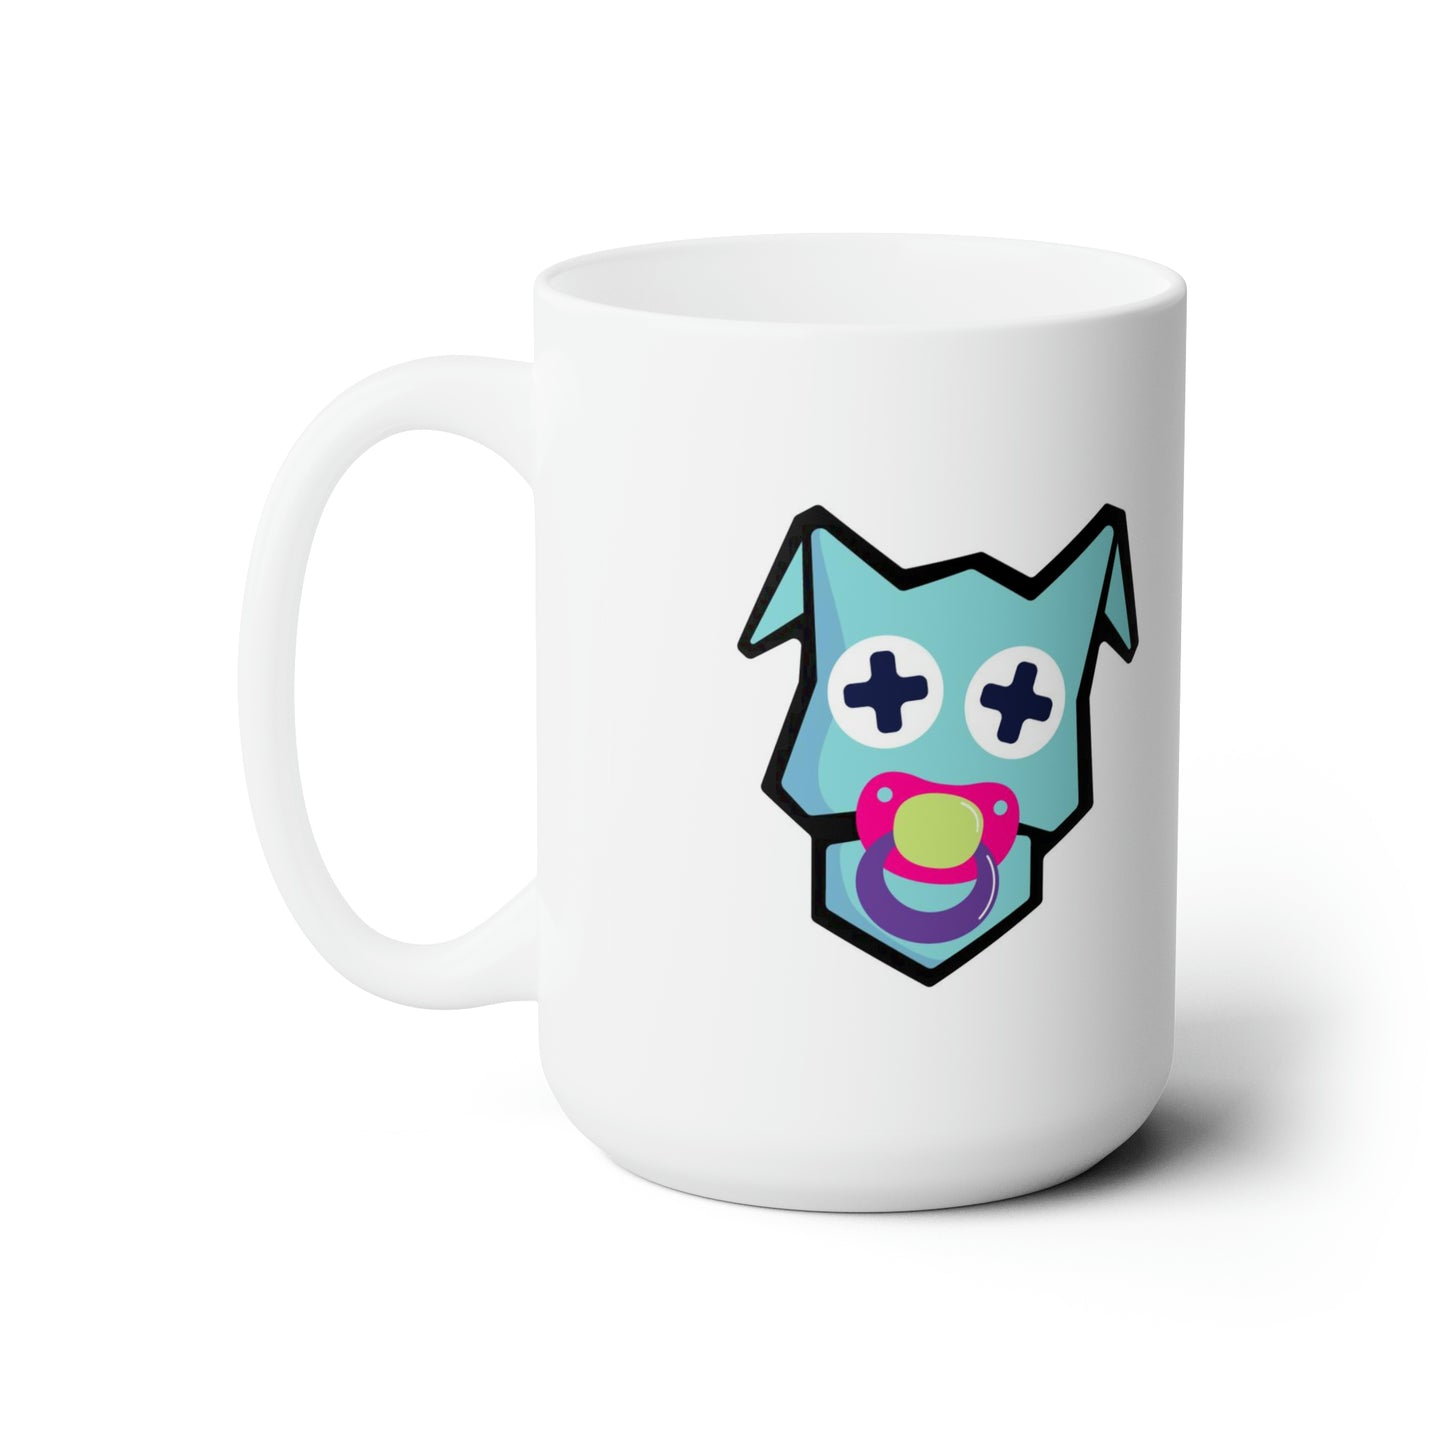 The Baby - Puppy Ceramic Mug 15oz